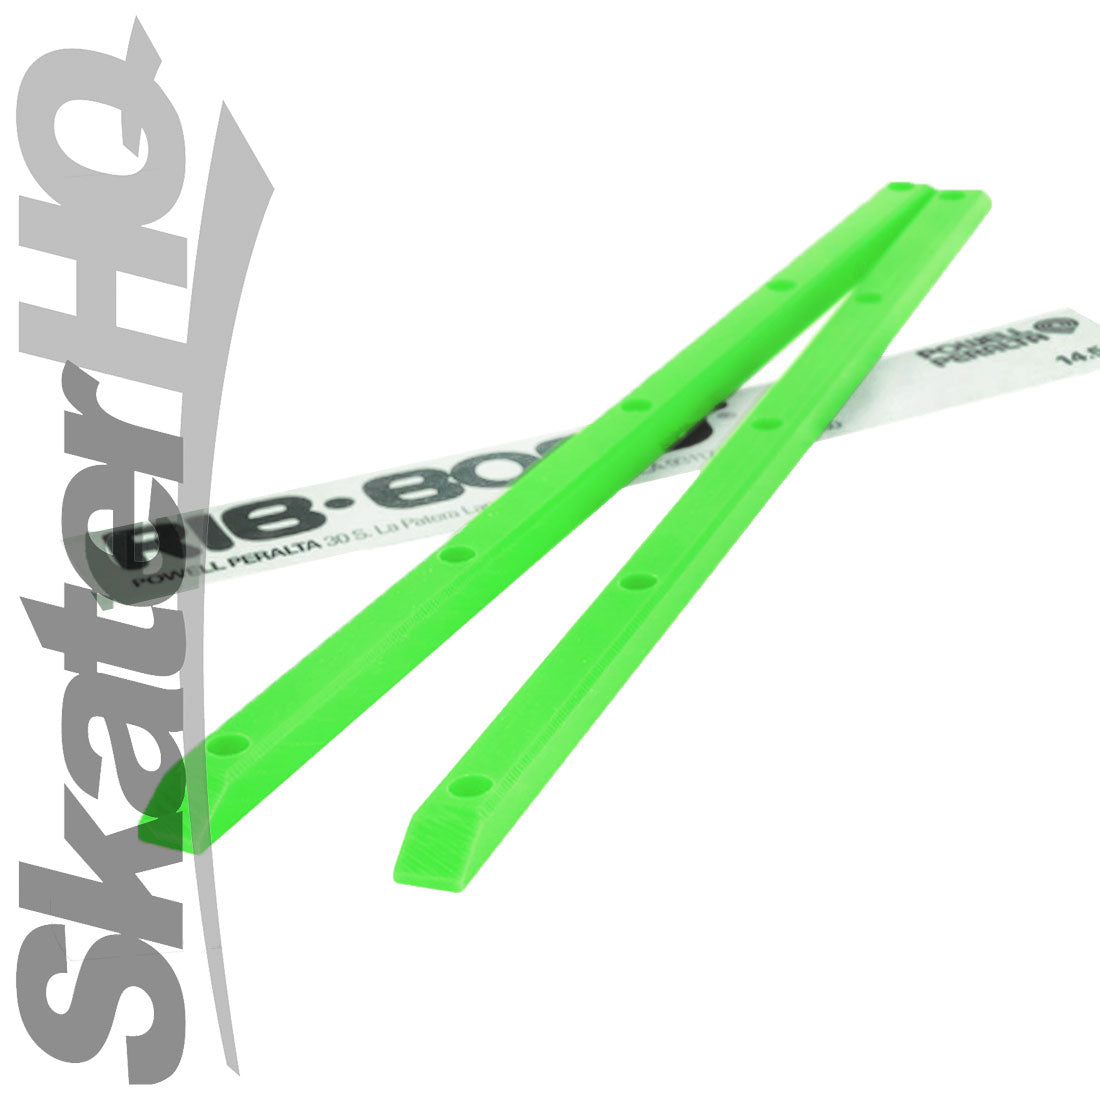 Powell Peralta Rib Bones 14.5 Rails - Neon Green Skateboard Hardware and Parts